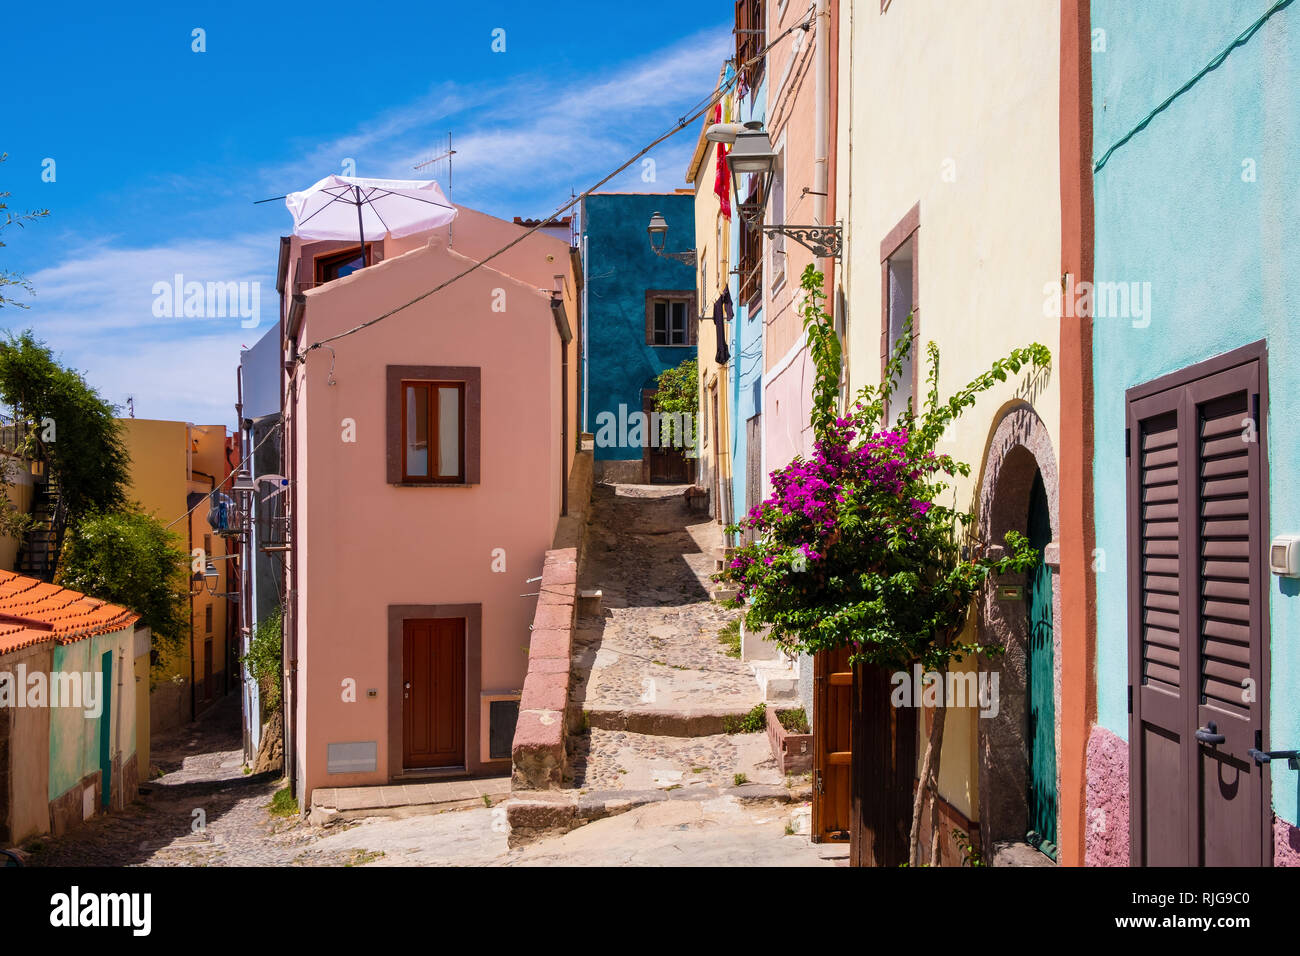 Bosa, Sardinia / Italy - 2018/08/13: Bosa historic old town quarter with colorful tenements and narrow street of Via Muruidda Stock Photo